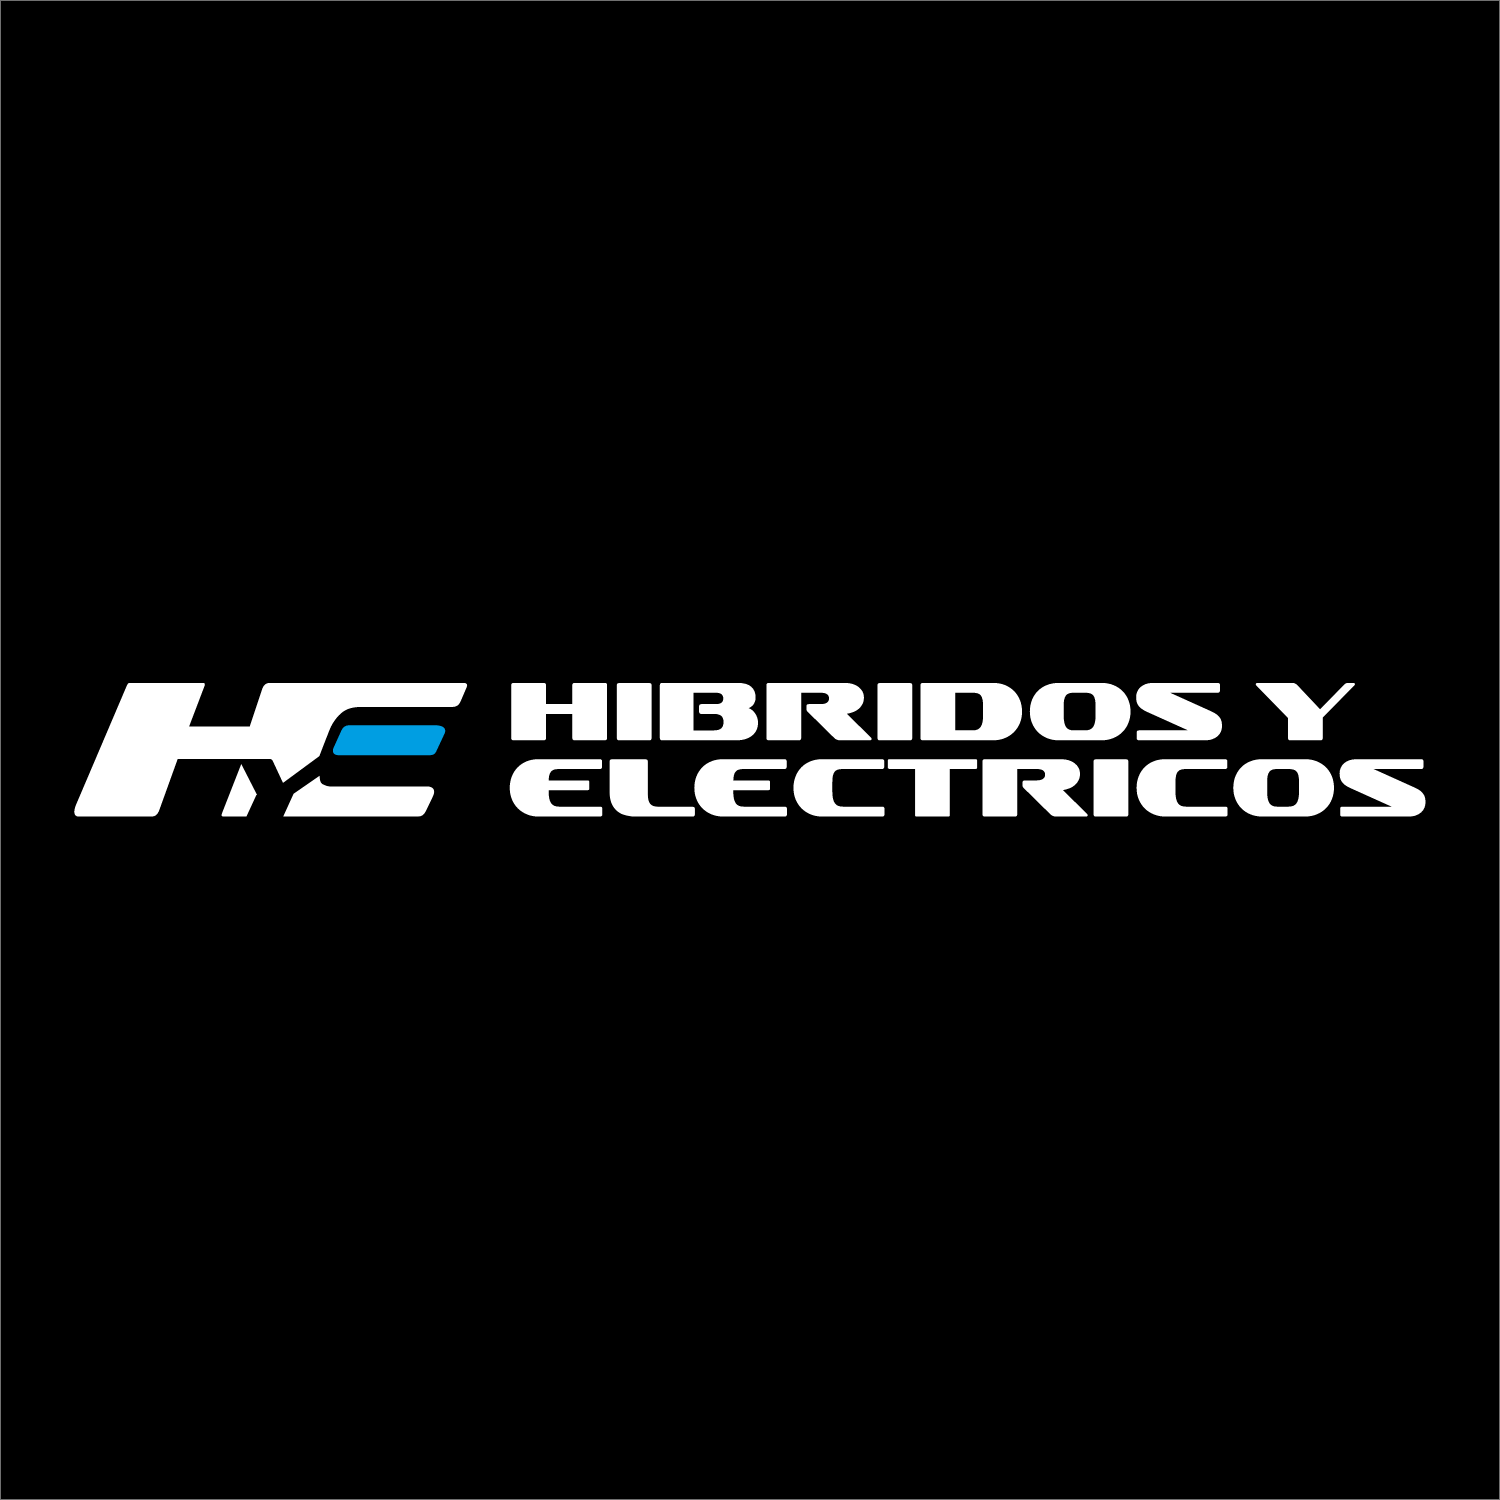 www.hibridosyelectricos.com